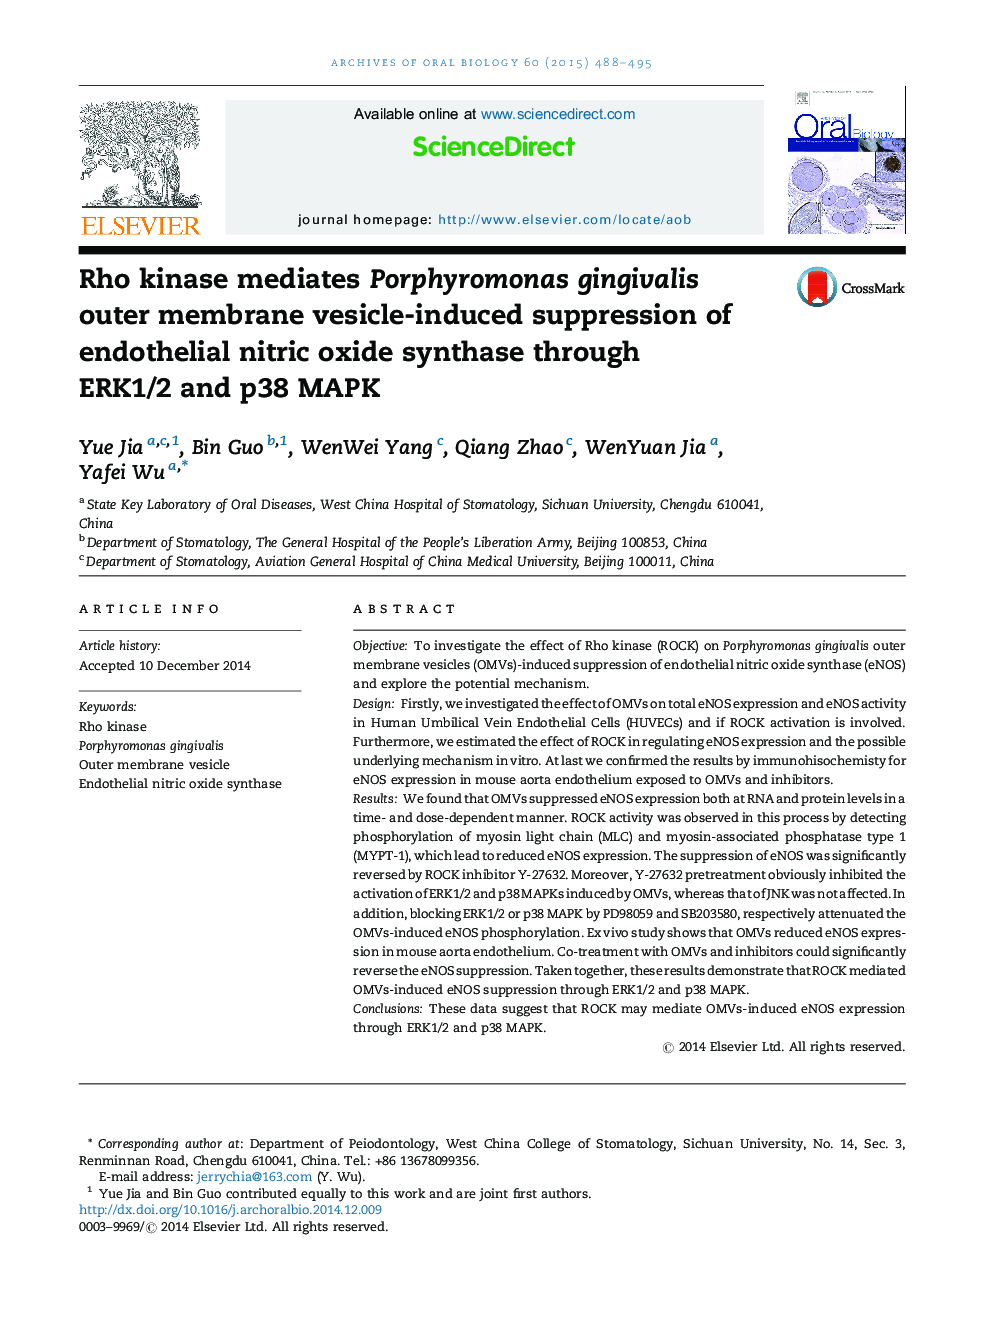 Rho kinase mediates Porphyromonas gingivalis outer membrane vesicle-induced suppression of endothelial nitric oxide synthase through ERK1/2 and p38 MAPK